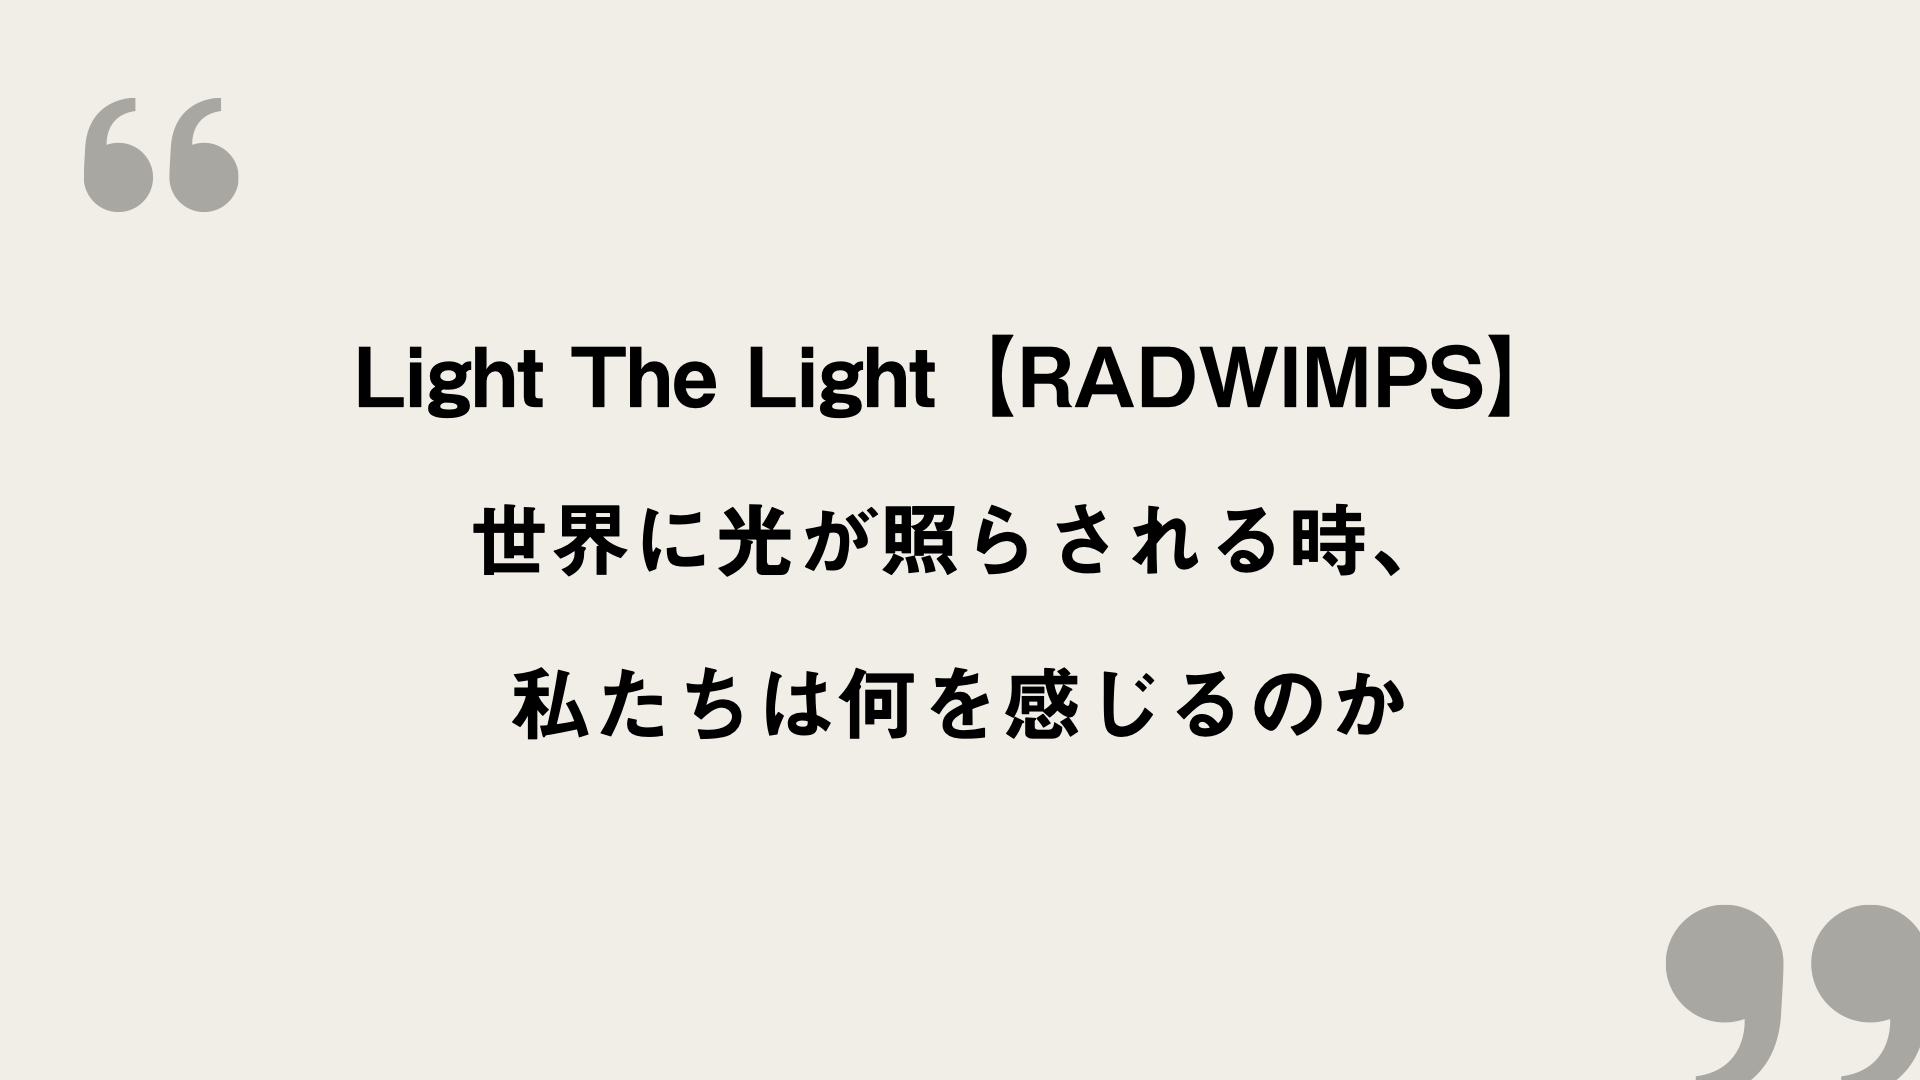 Light The Light Radwimps 歌詞の意味を考察 世界に光が照らされる時 私たちは何を感じるのか Framu Media